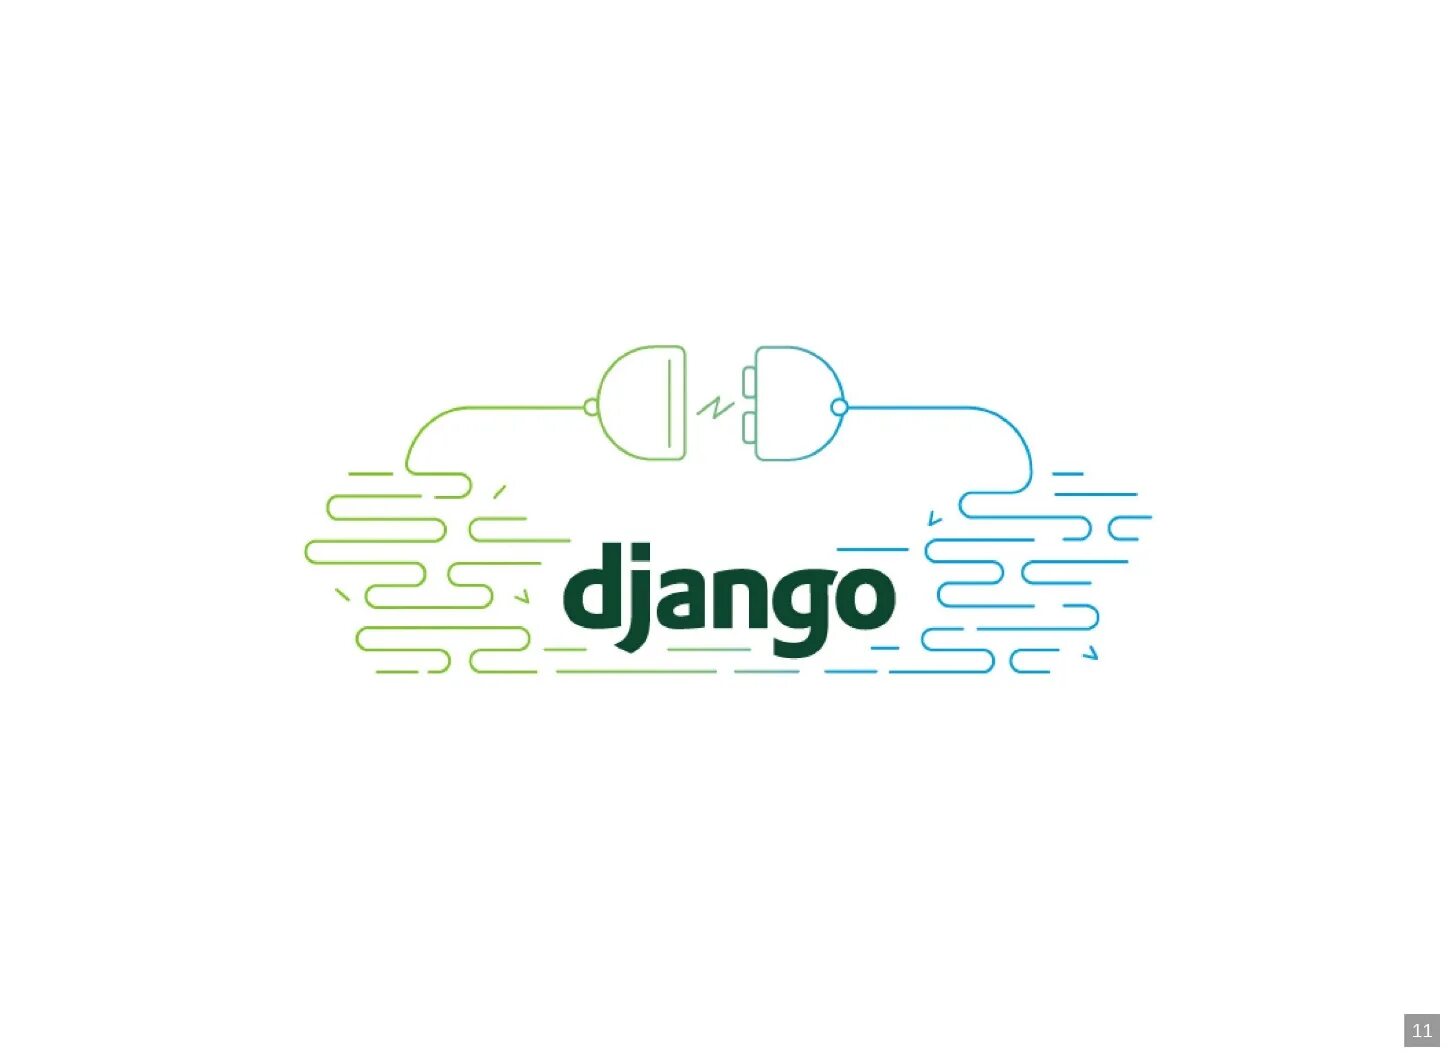 Django unique. Архитектура Django channels. Веб сайт Джанго. Веб технологии Django. Django логотип.